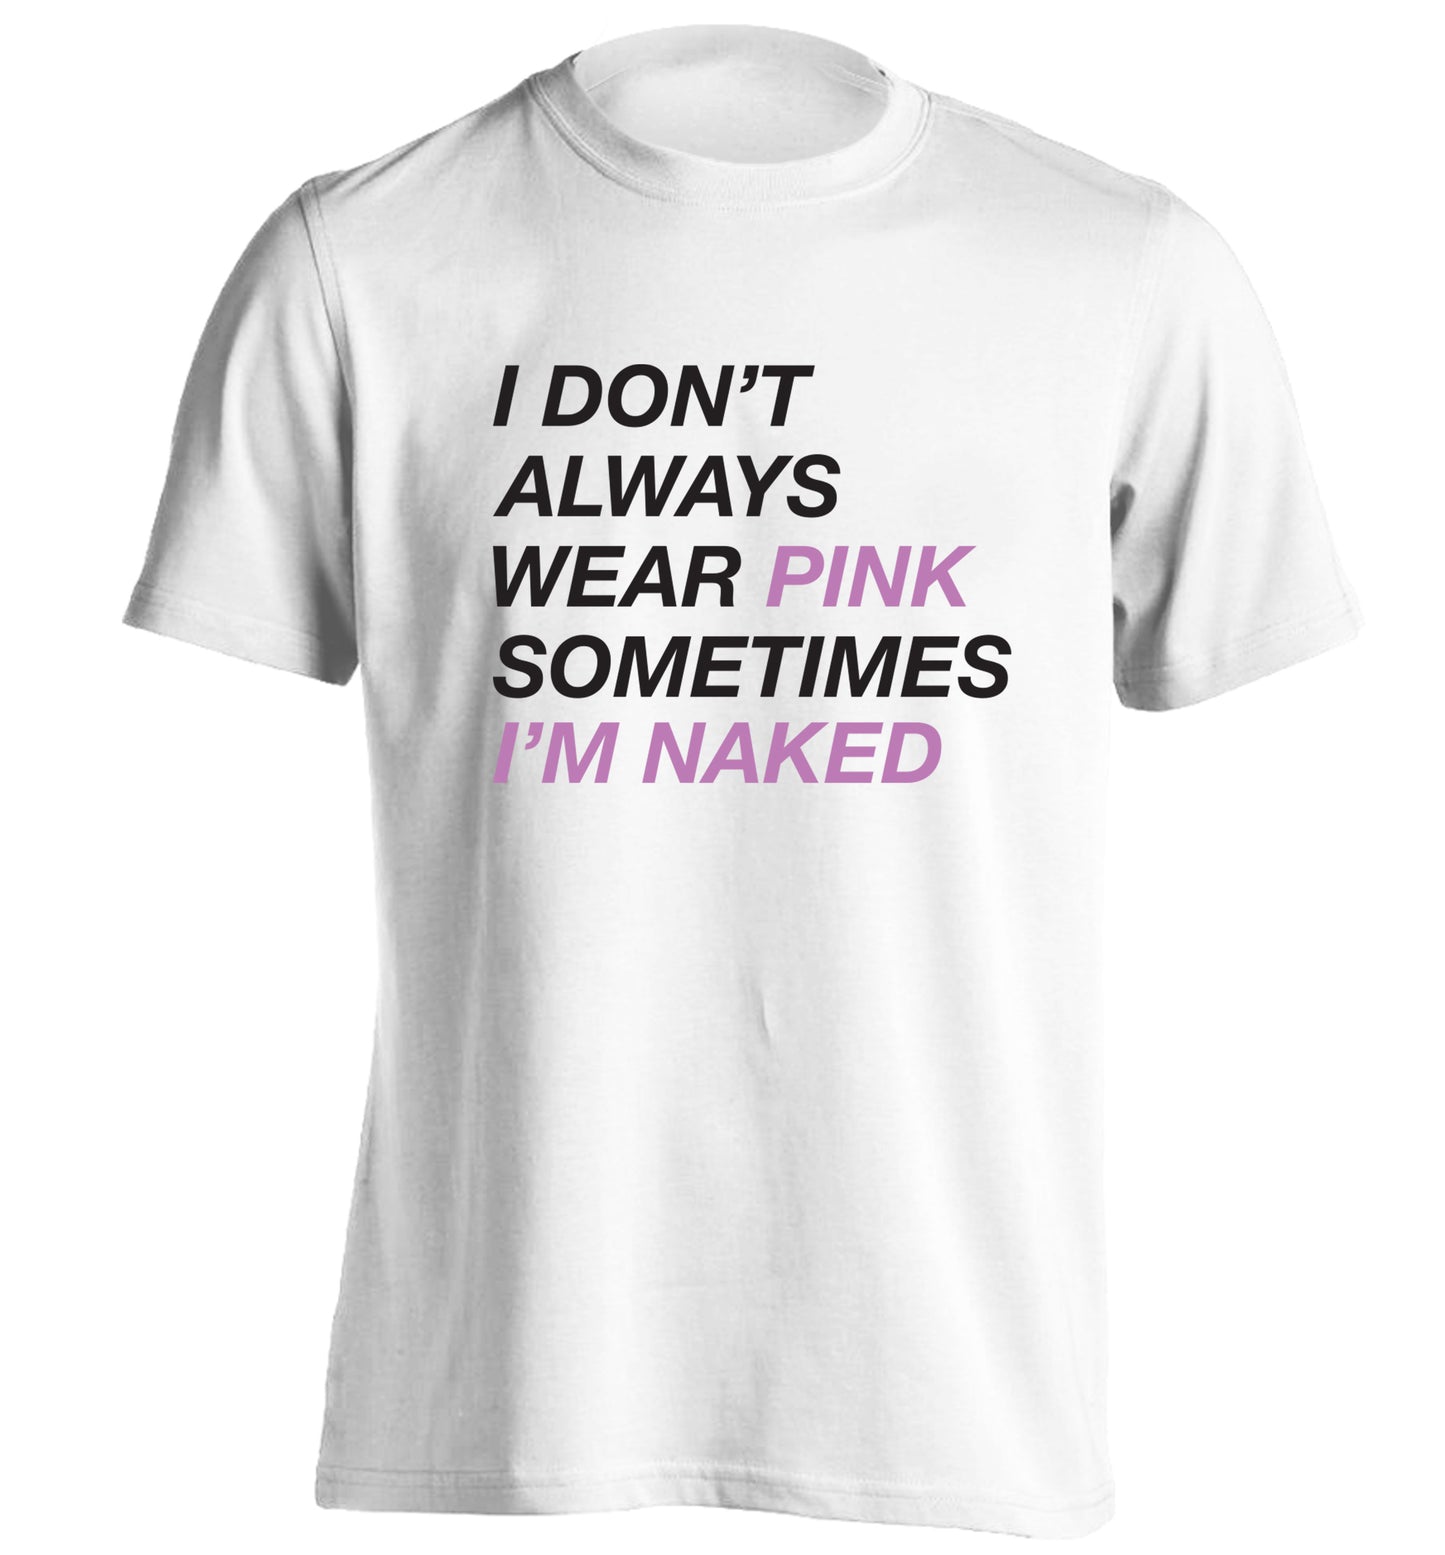 I don't always wear pink sometimes I'm naked adults unisex white Tshirt 2XL